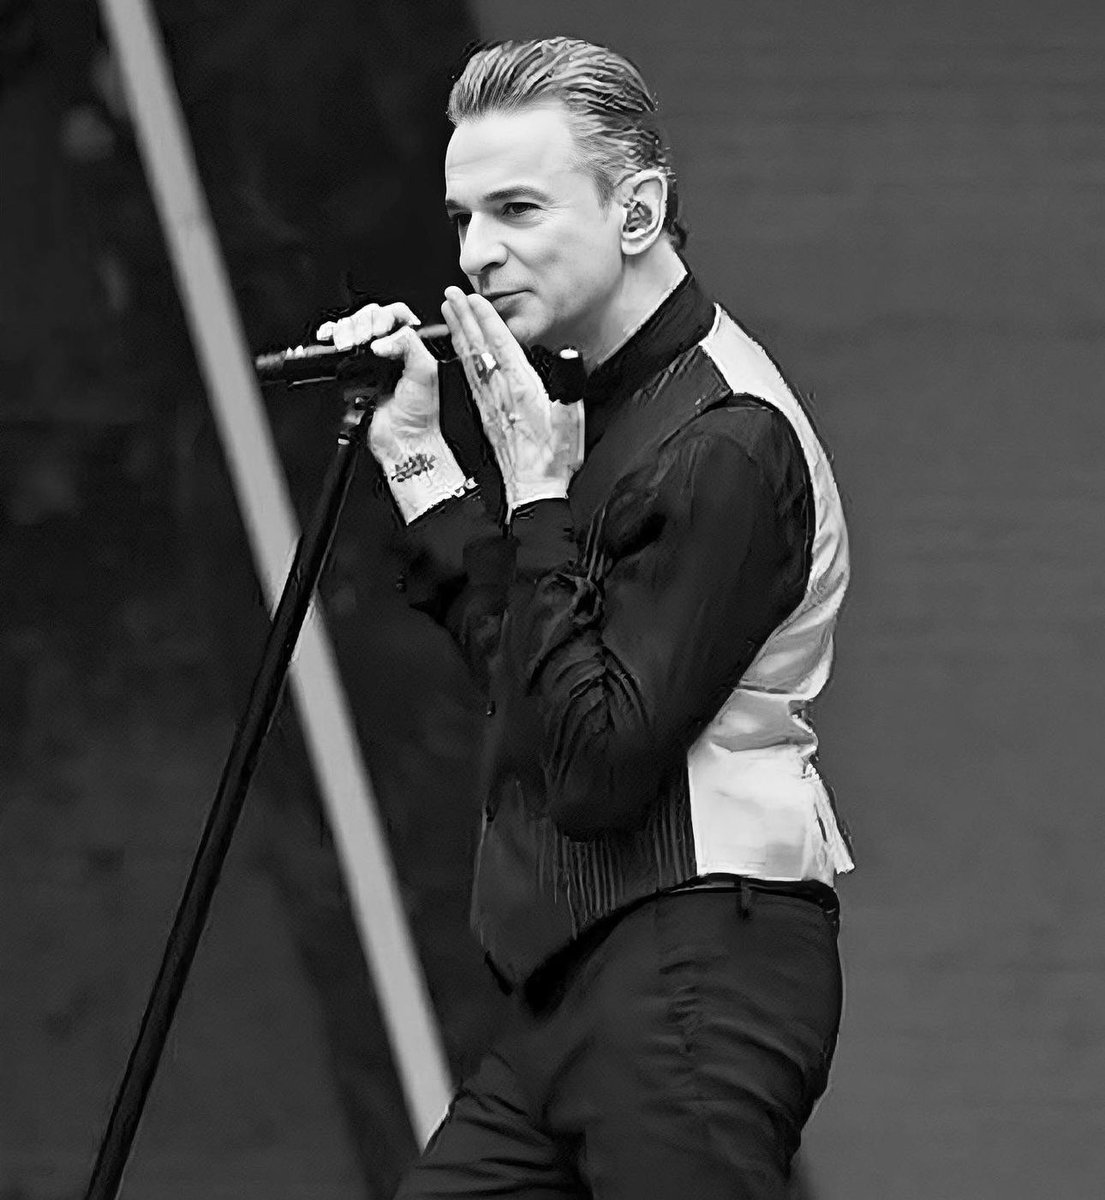 Memento Mori Tour
#DepecheMode